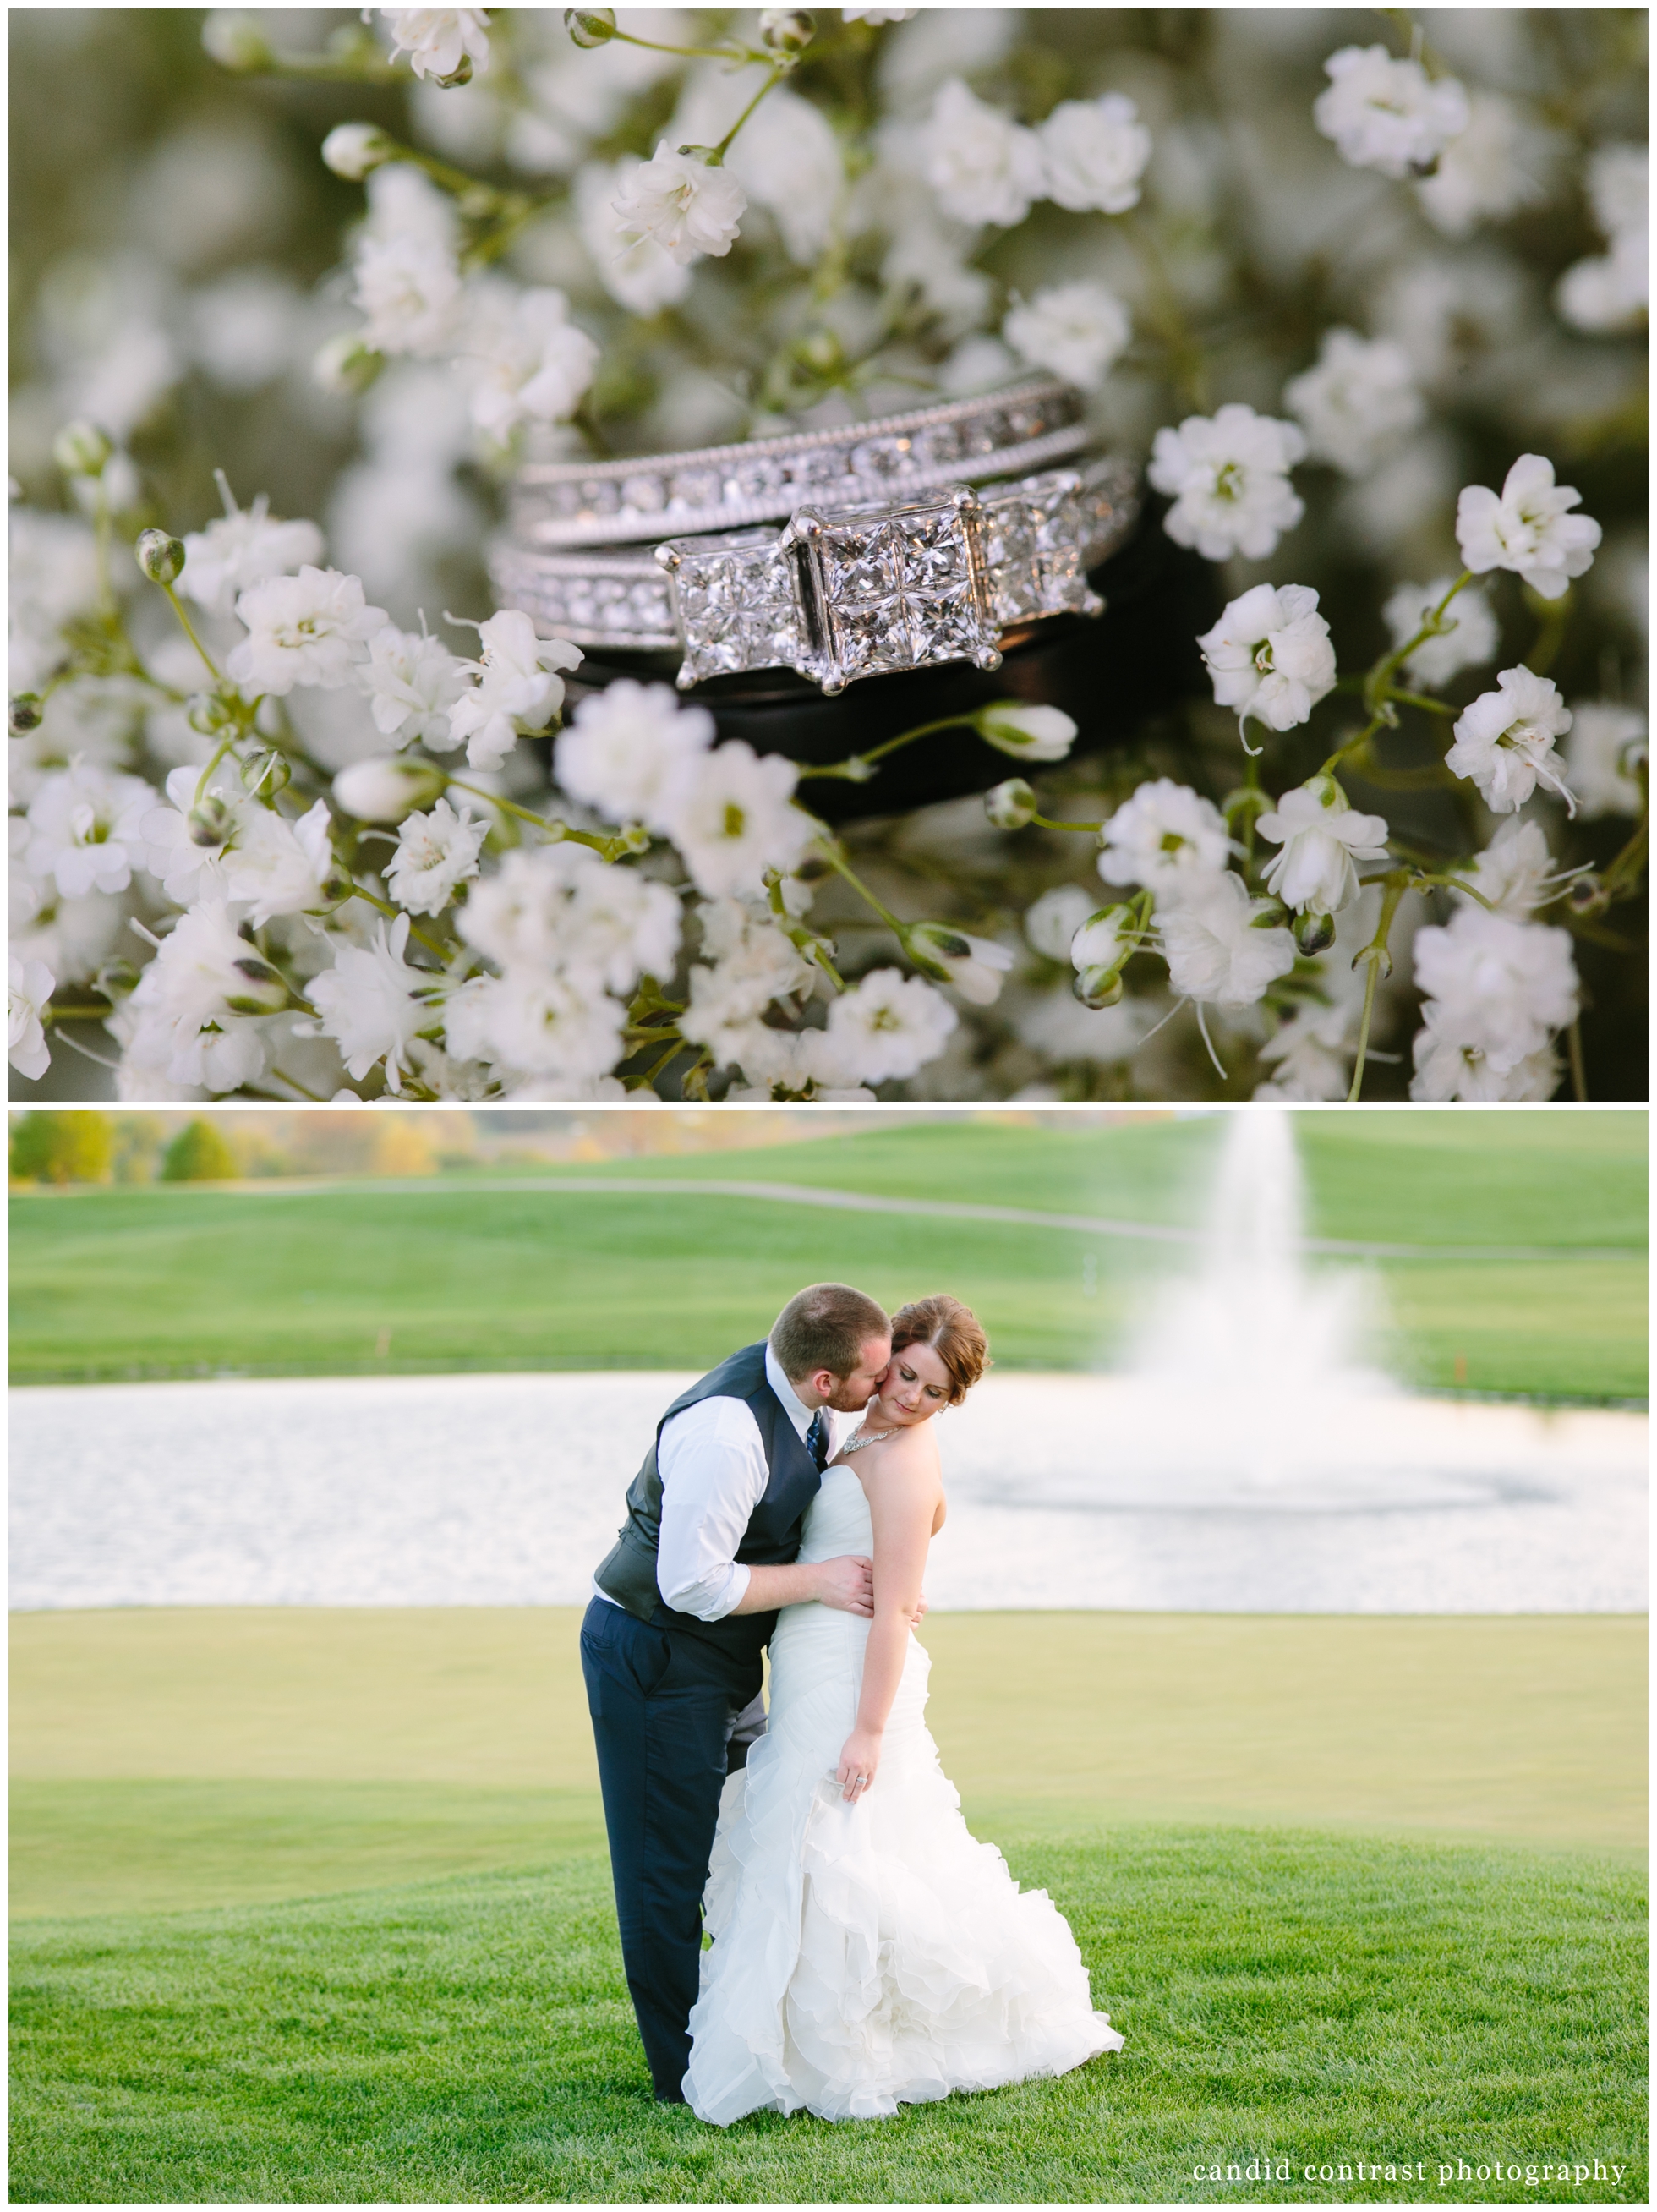 wedding ceremony at the Meadows Golf Club, Dubuque iowa wedding, candid contrast photography